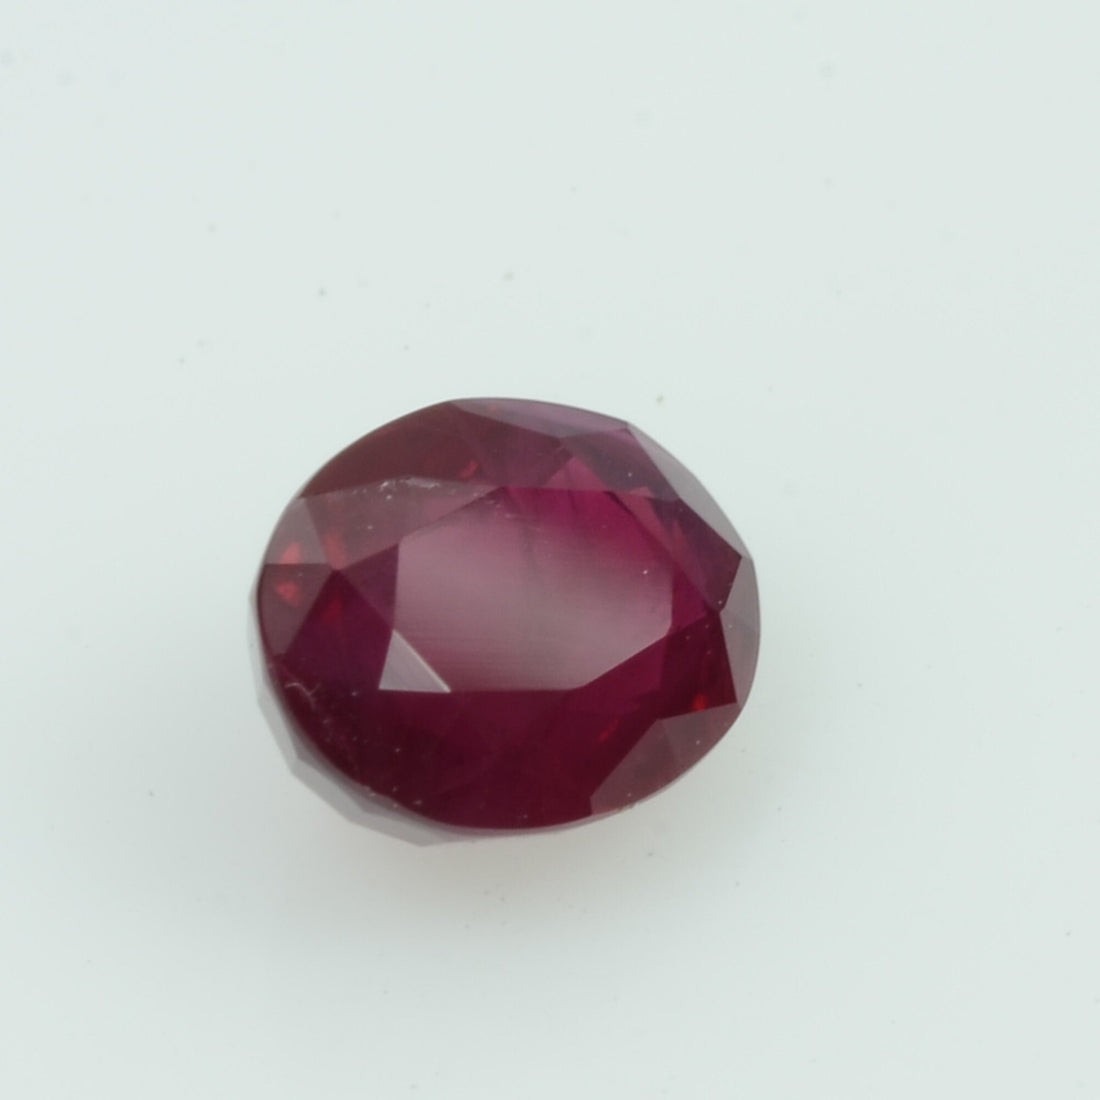 1.10 Cts Natural Burma Ruby Loose Gemstone Oval Cut